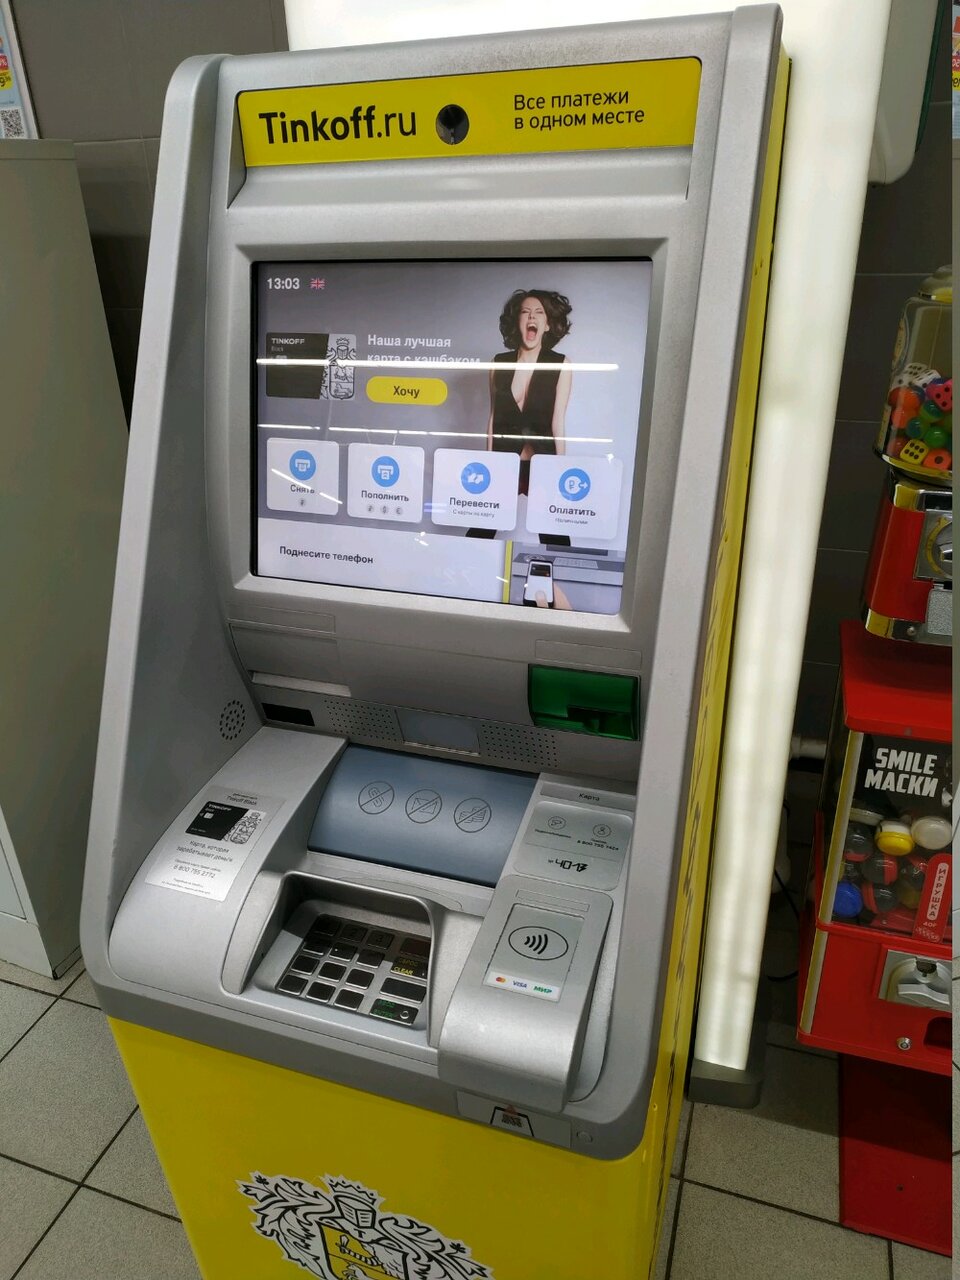 Внести деньги на тинькофф через банкомат сбербанка. Экран банкомата тинькофф. Интерфейс банкомата тинькофф. Терминал тинькофф. Валютный Банкомат тинькофф.